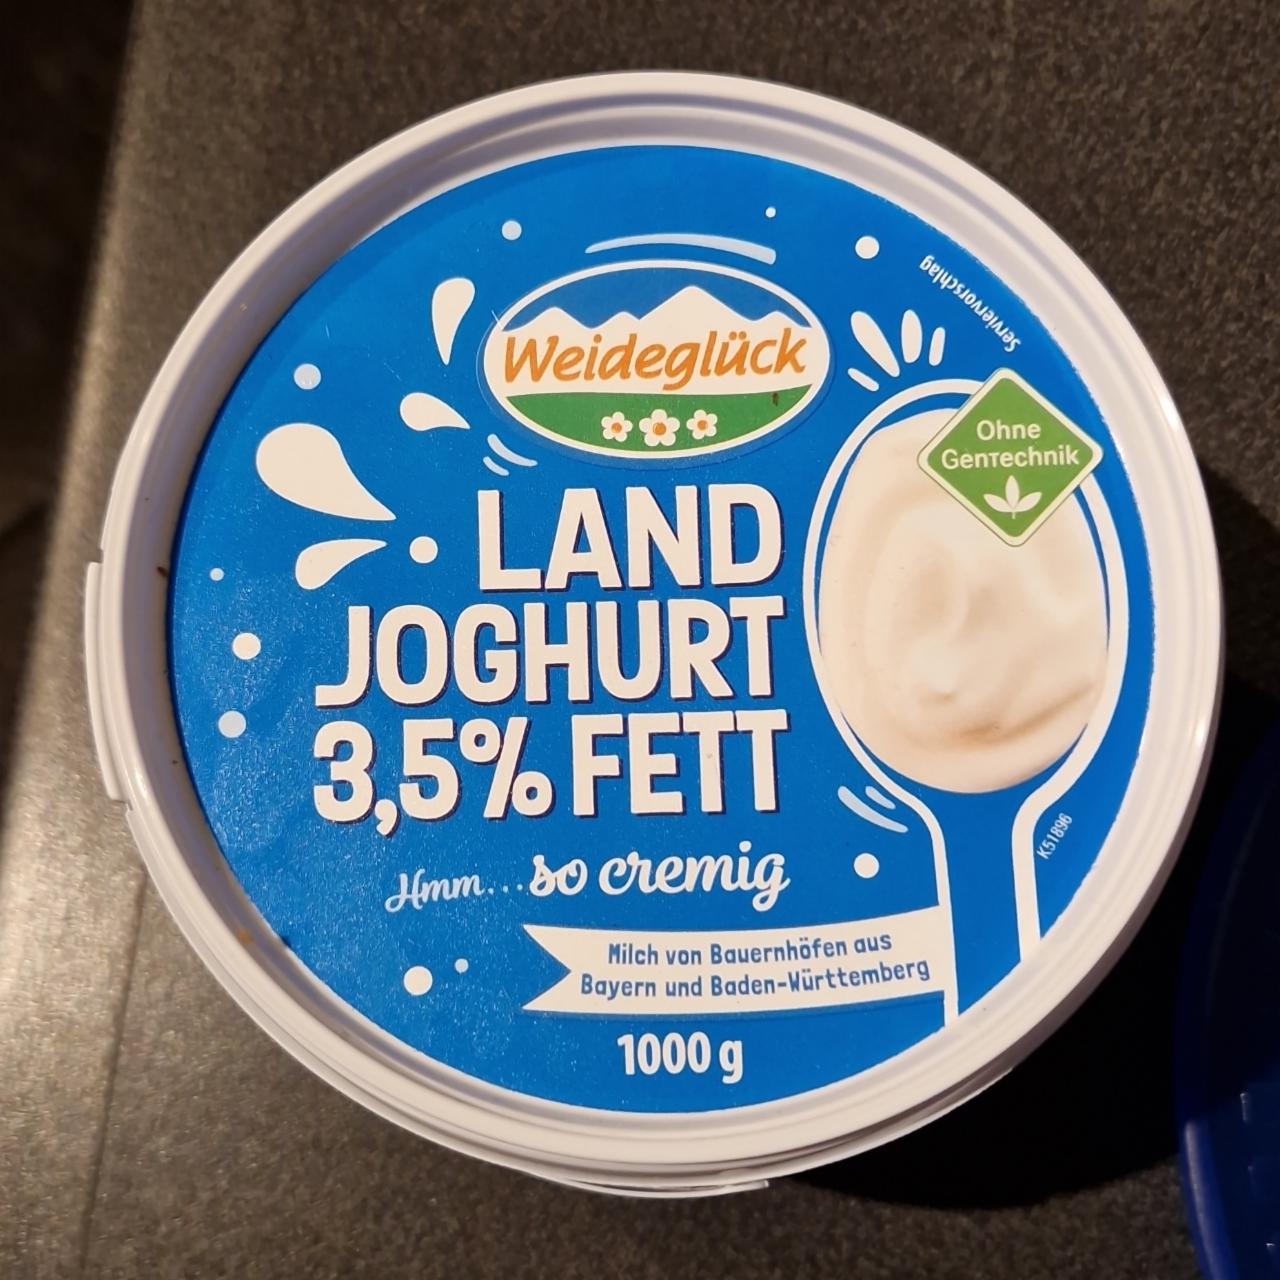 Фото - Йогурт белый 3.5% Land Yogurt Weidegluck